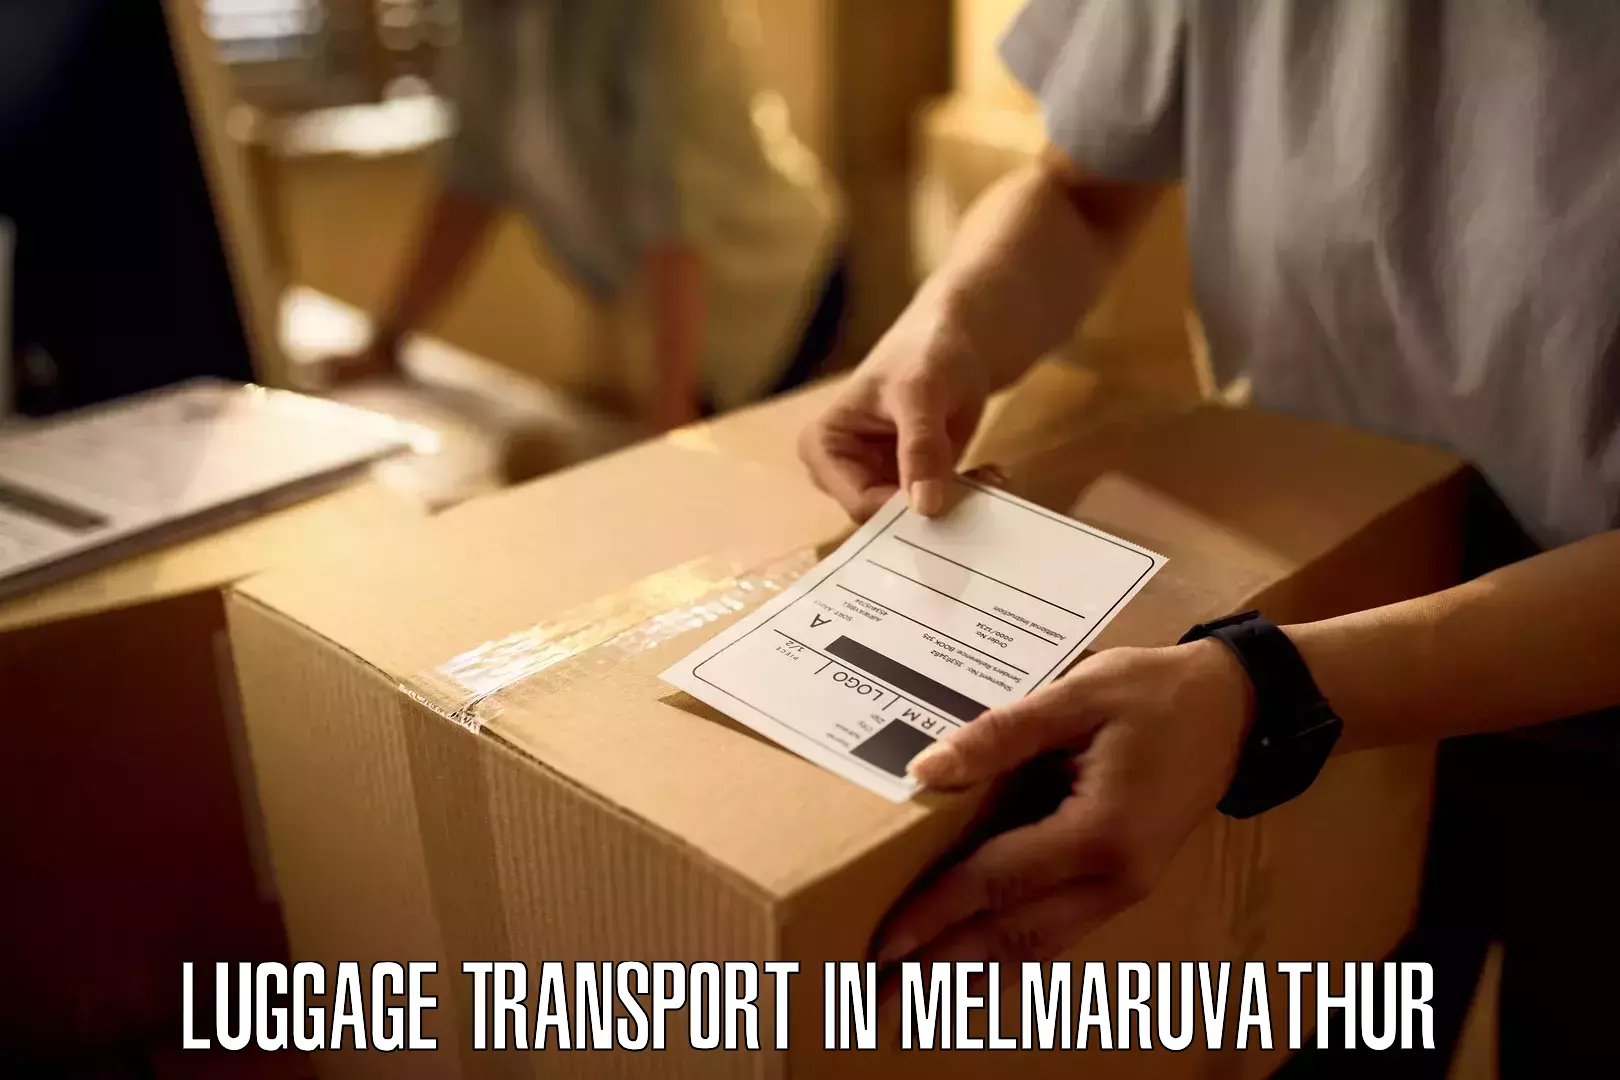 Luggage transport company in Melmaruvathur